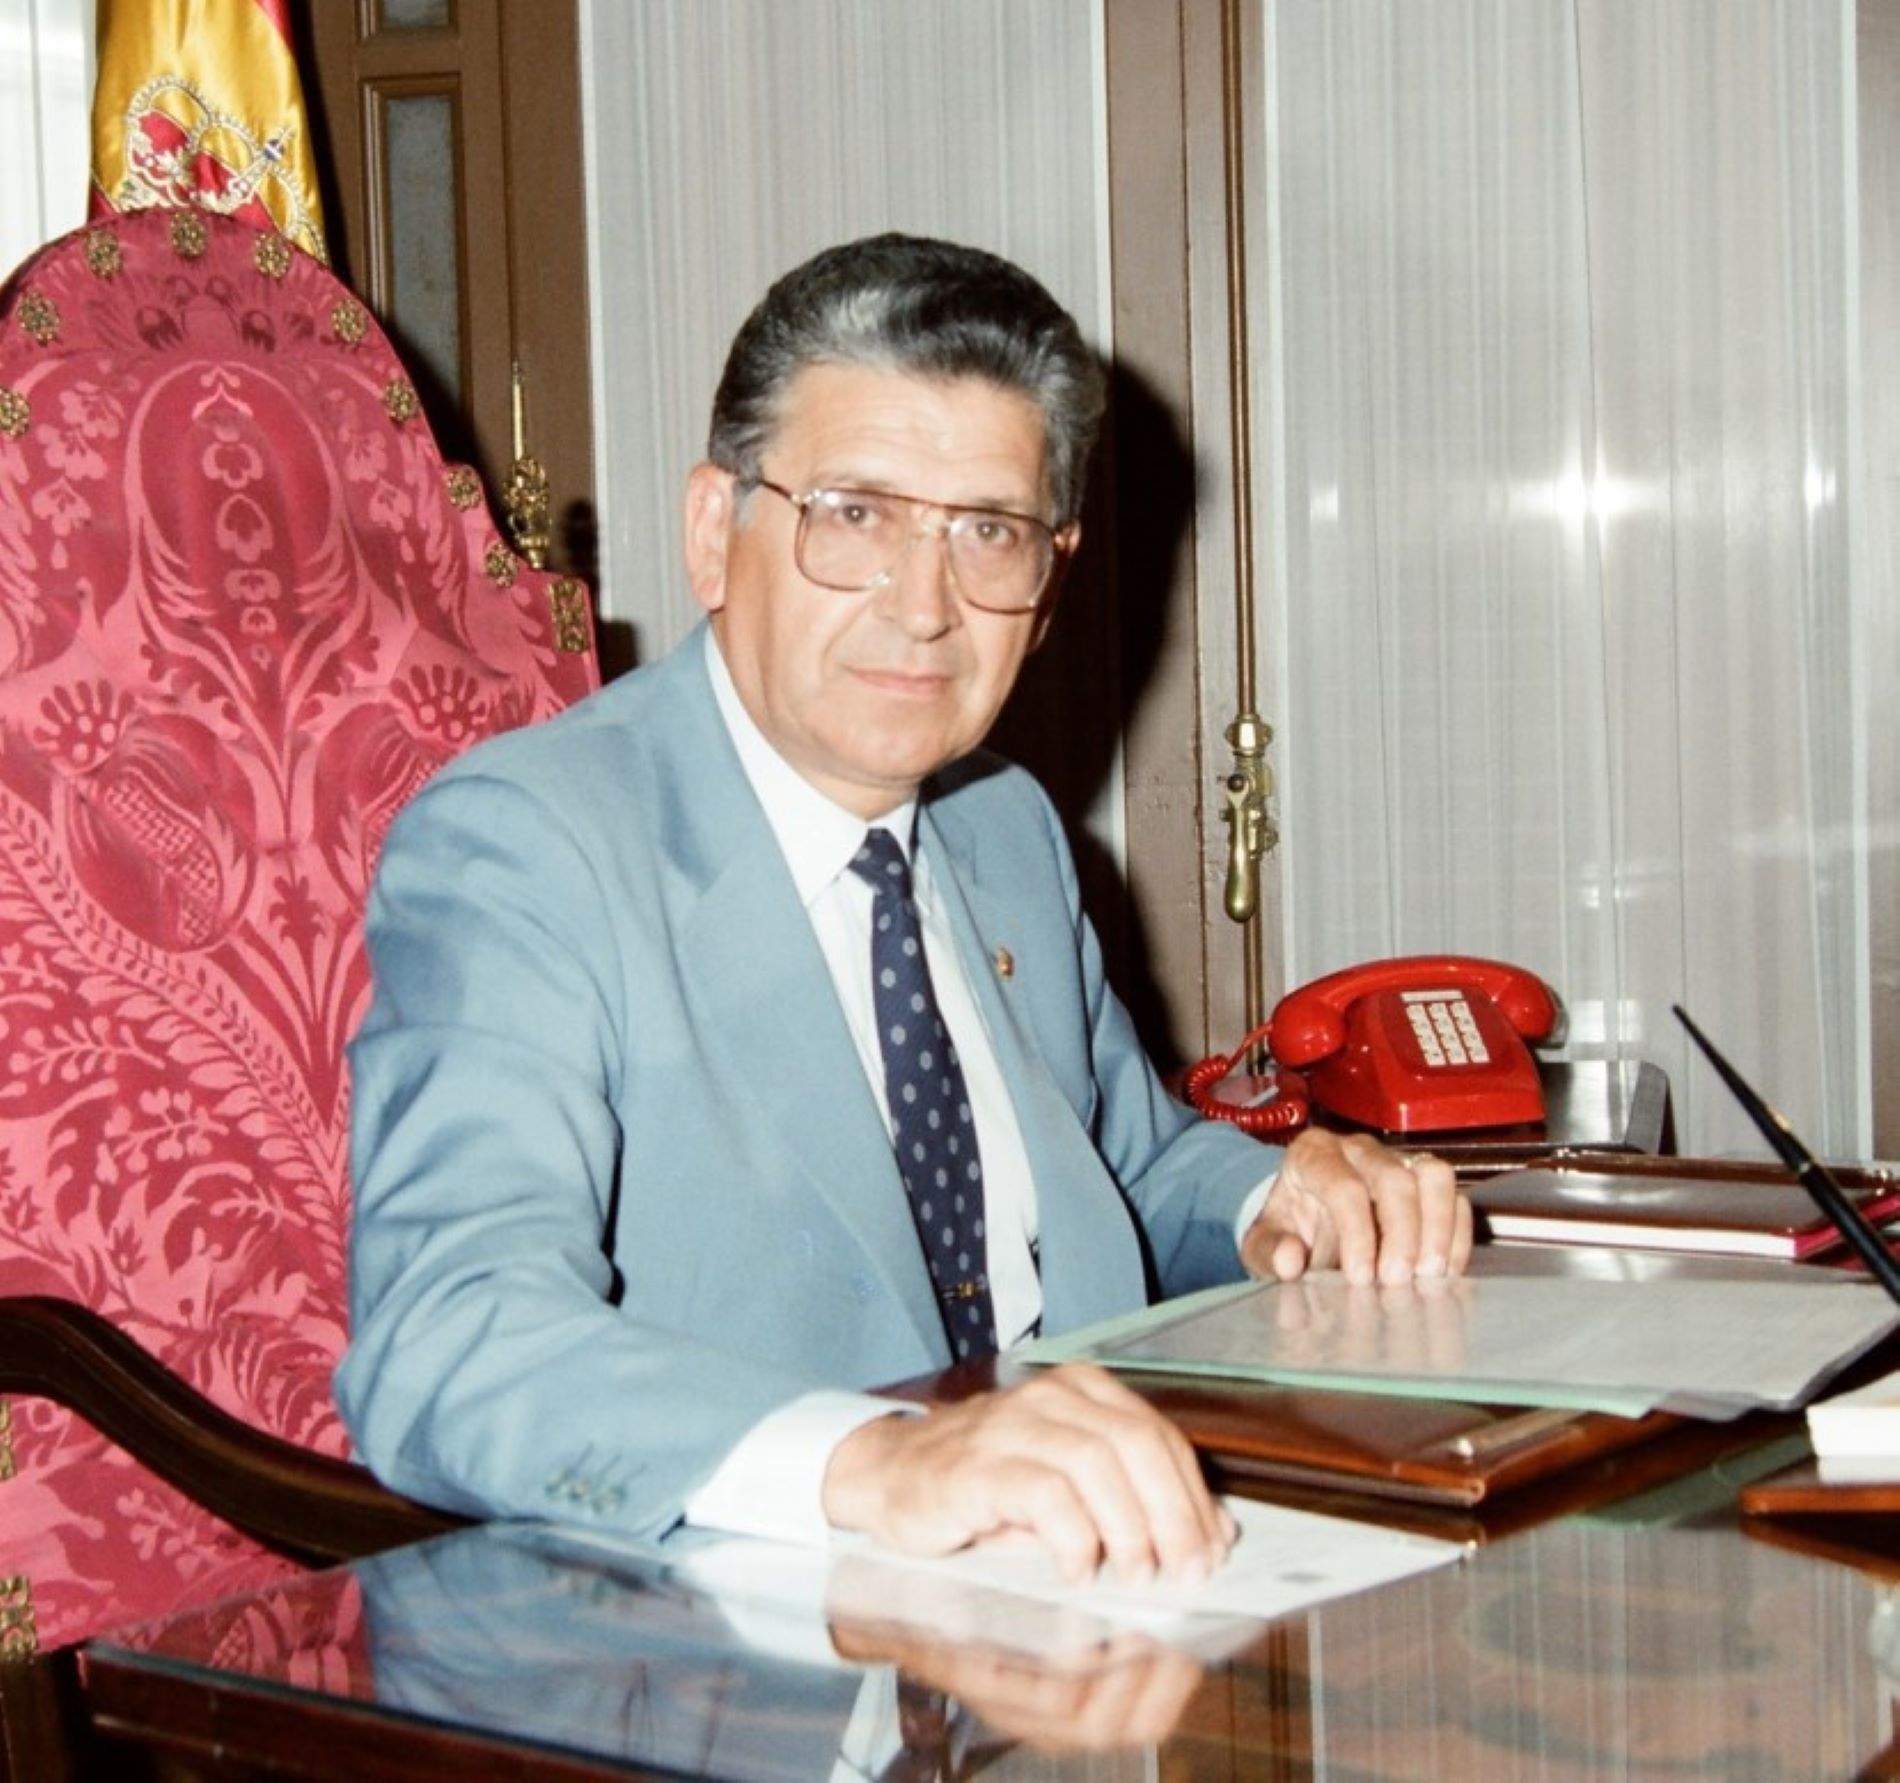 Muere Jeroni Albertí, expresidente del Parlament balear y fundador de Unió Mallorquina